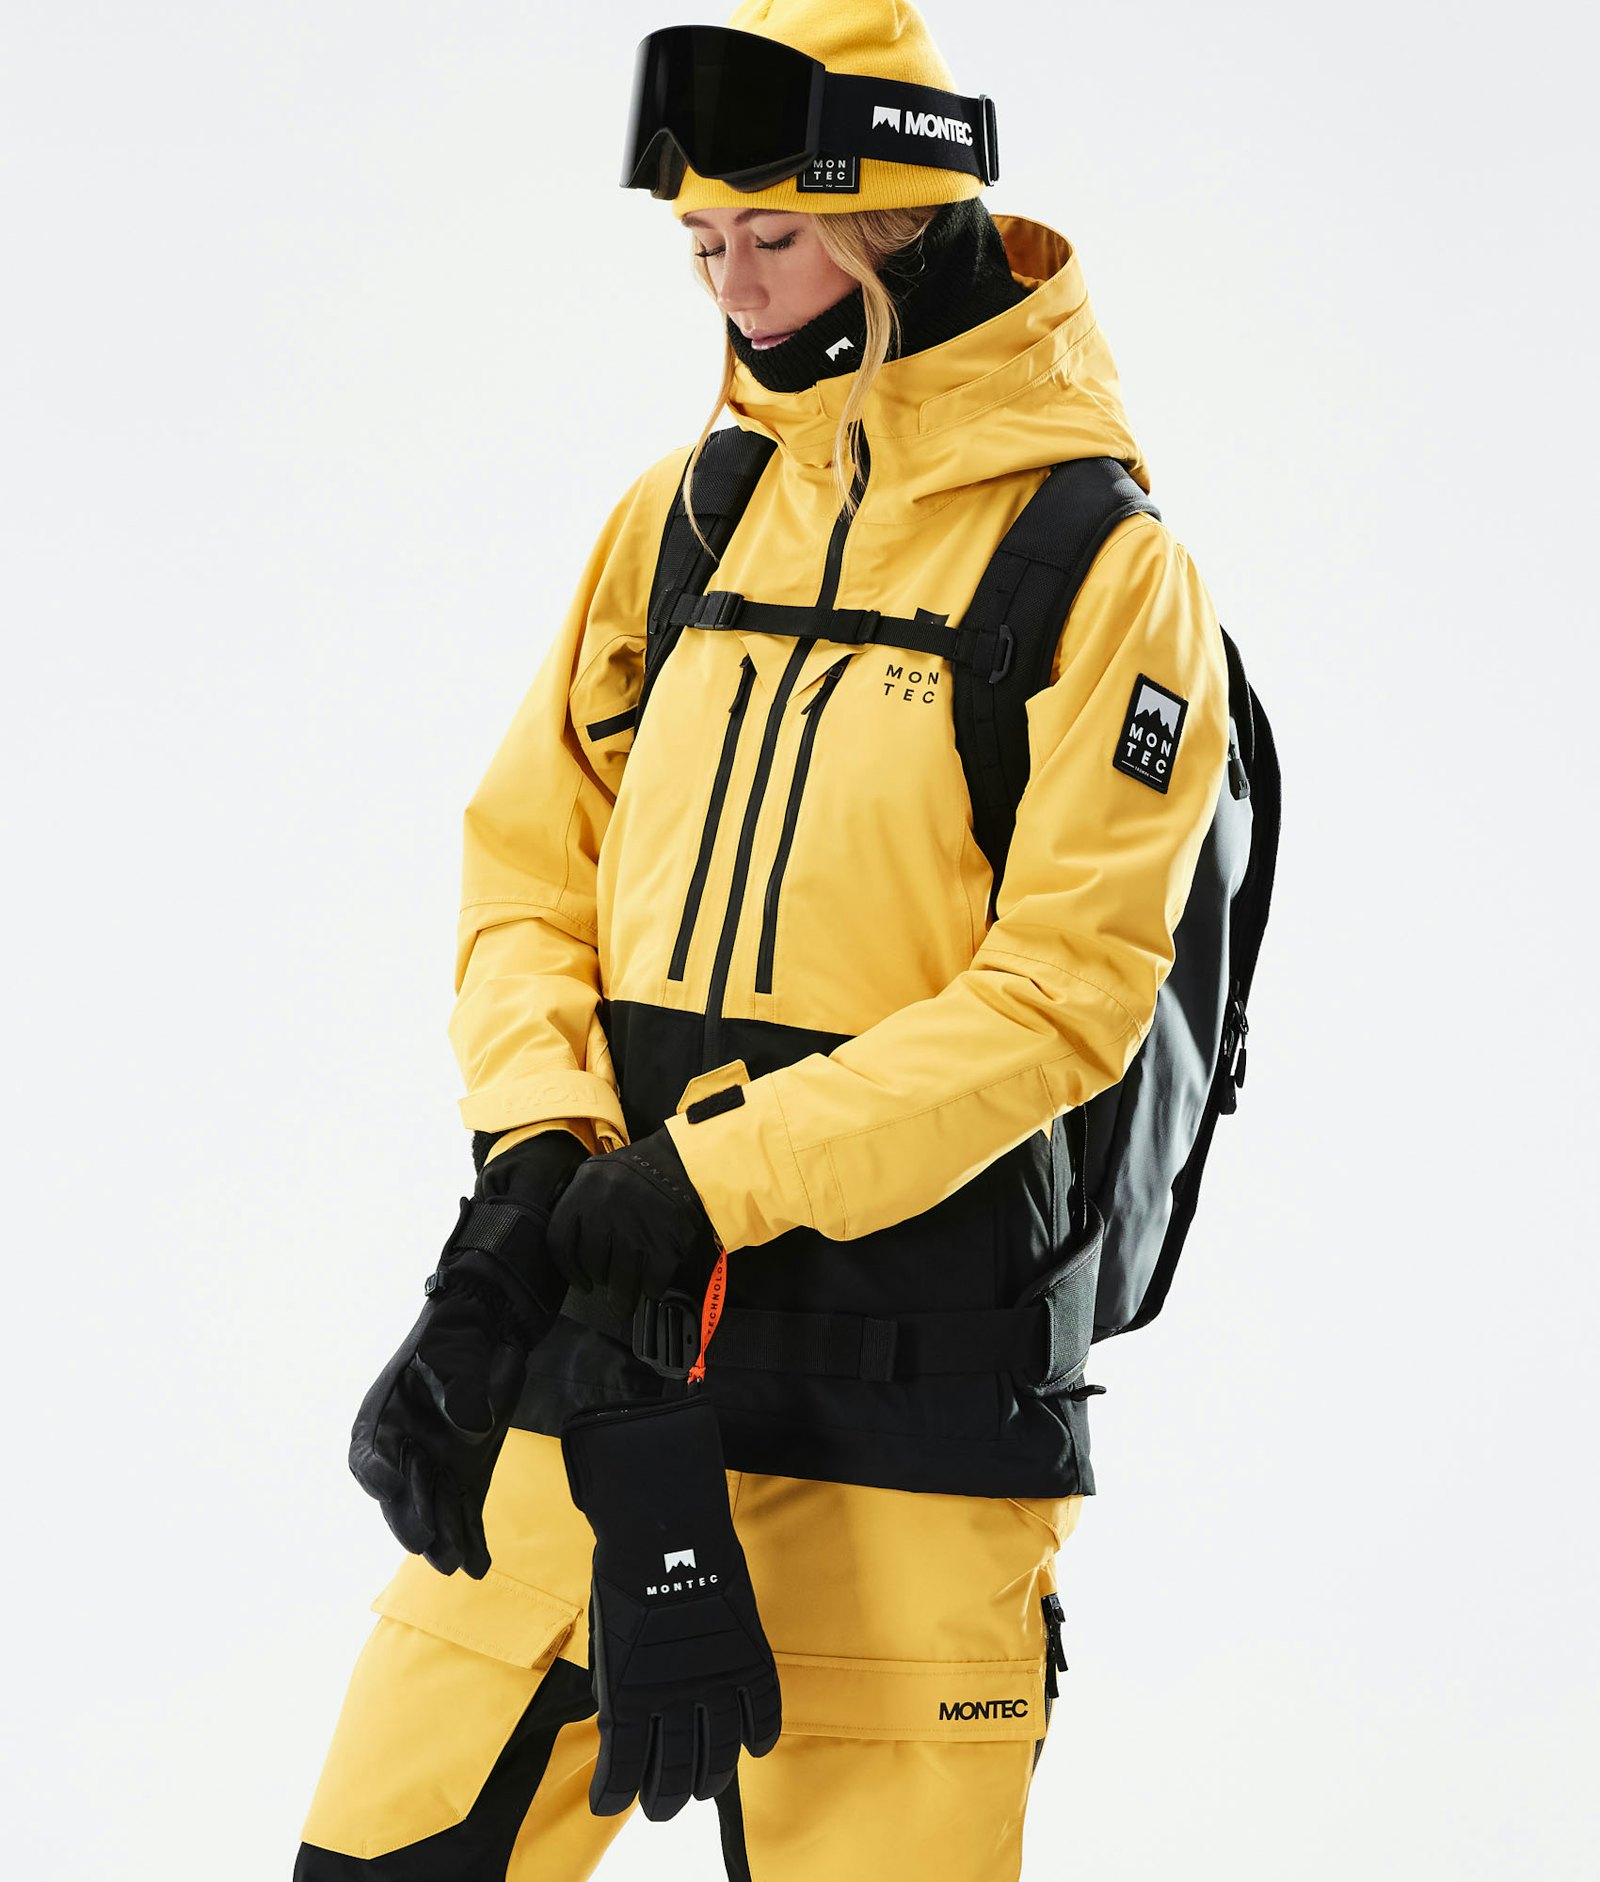 Moss W 2021 Snowboard Jacket Women Yellow/Black Renewed